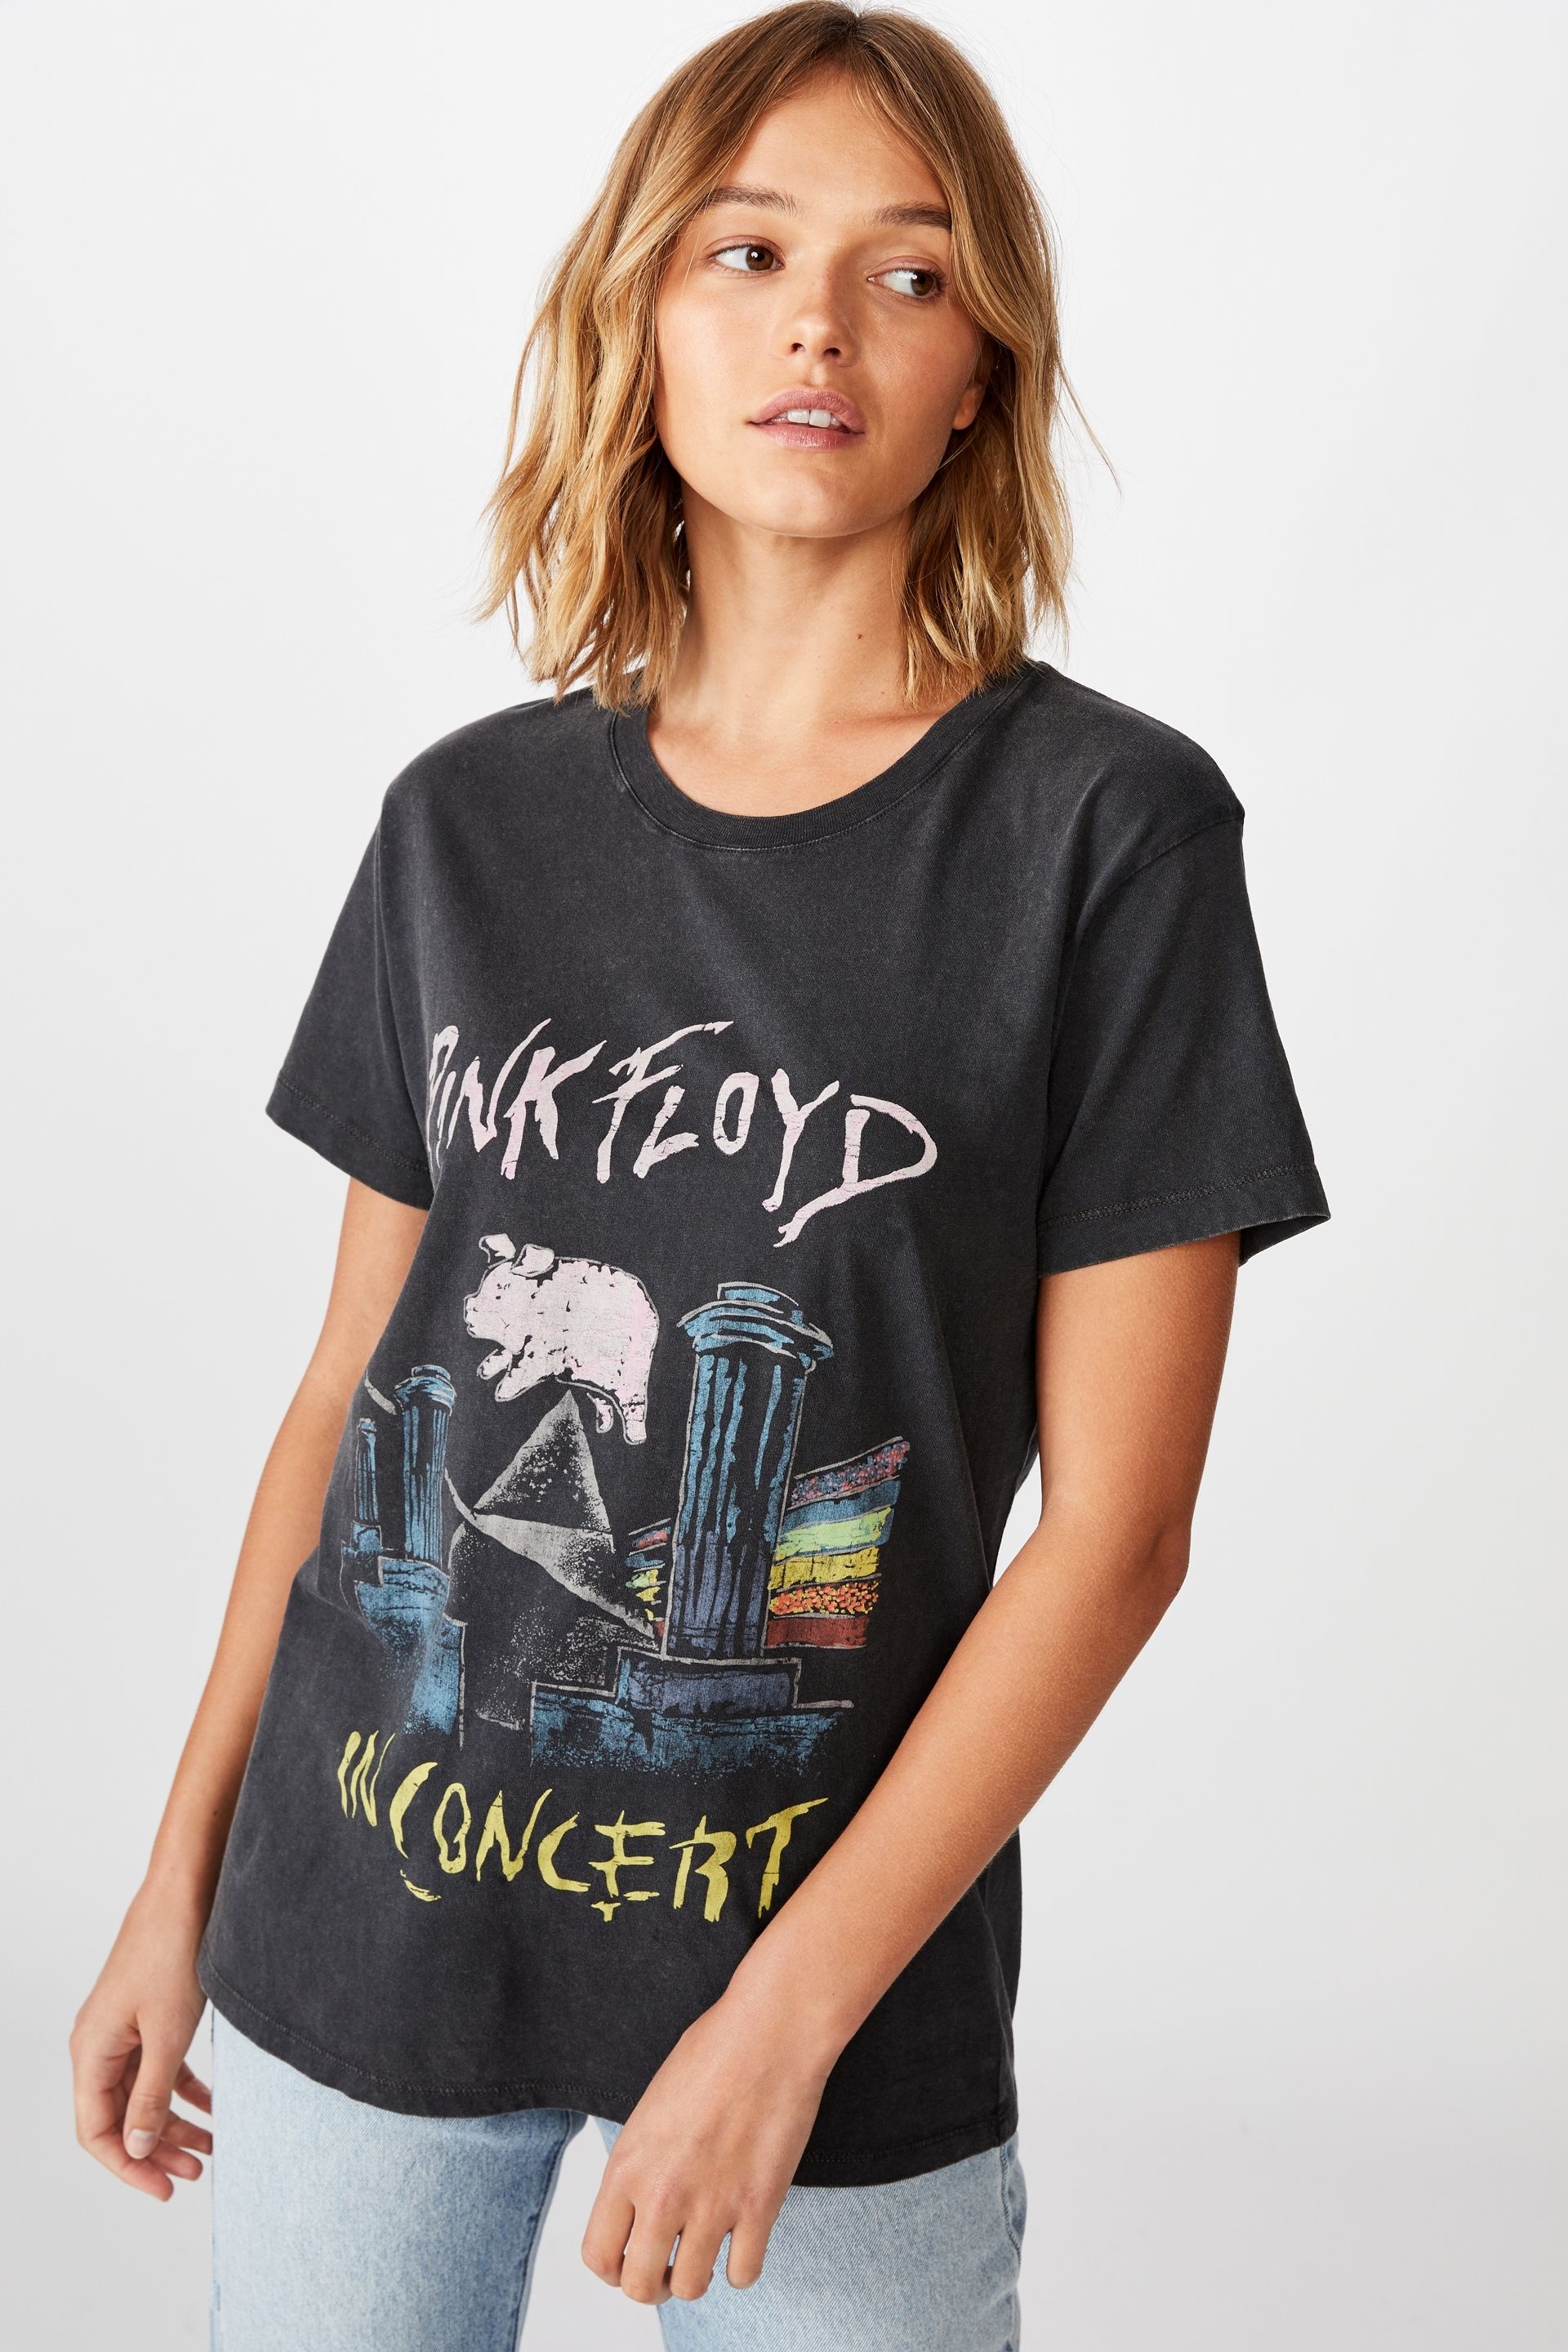 Classic Pink Floyd T Shirt | Cotton On (ANZ)